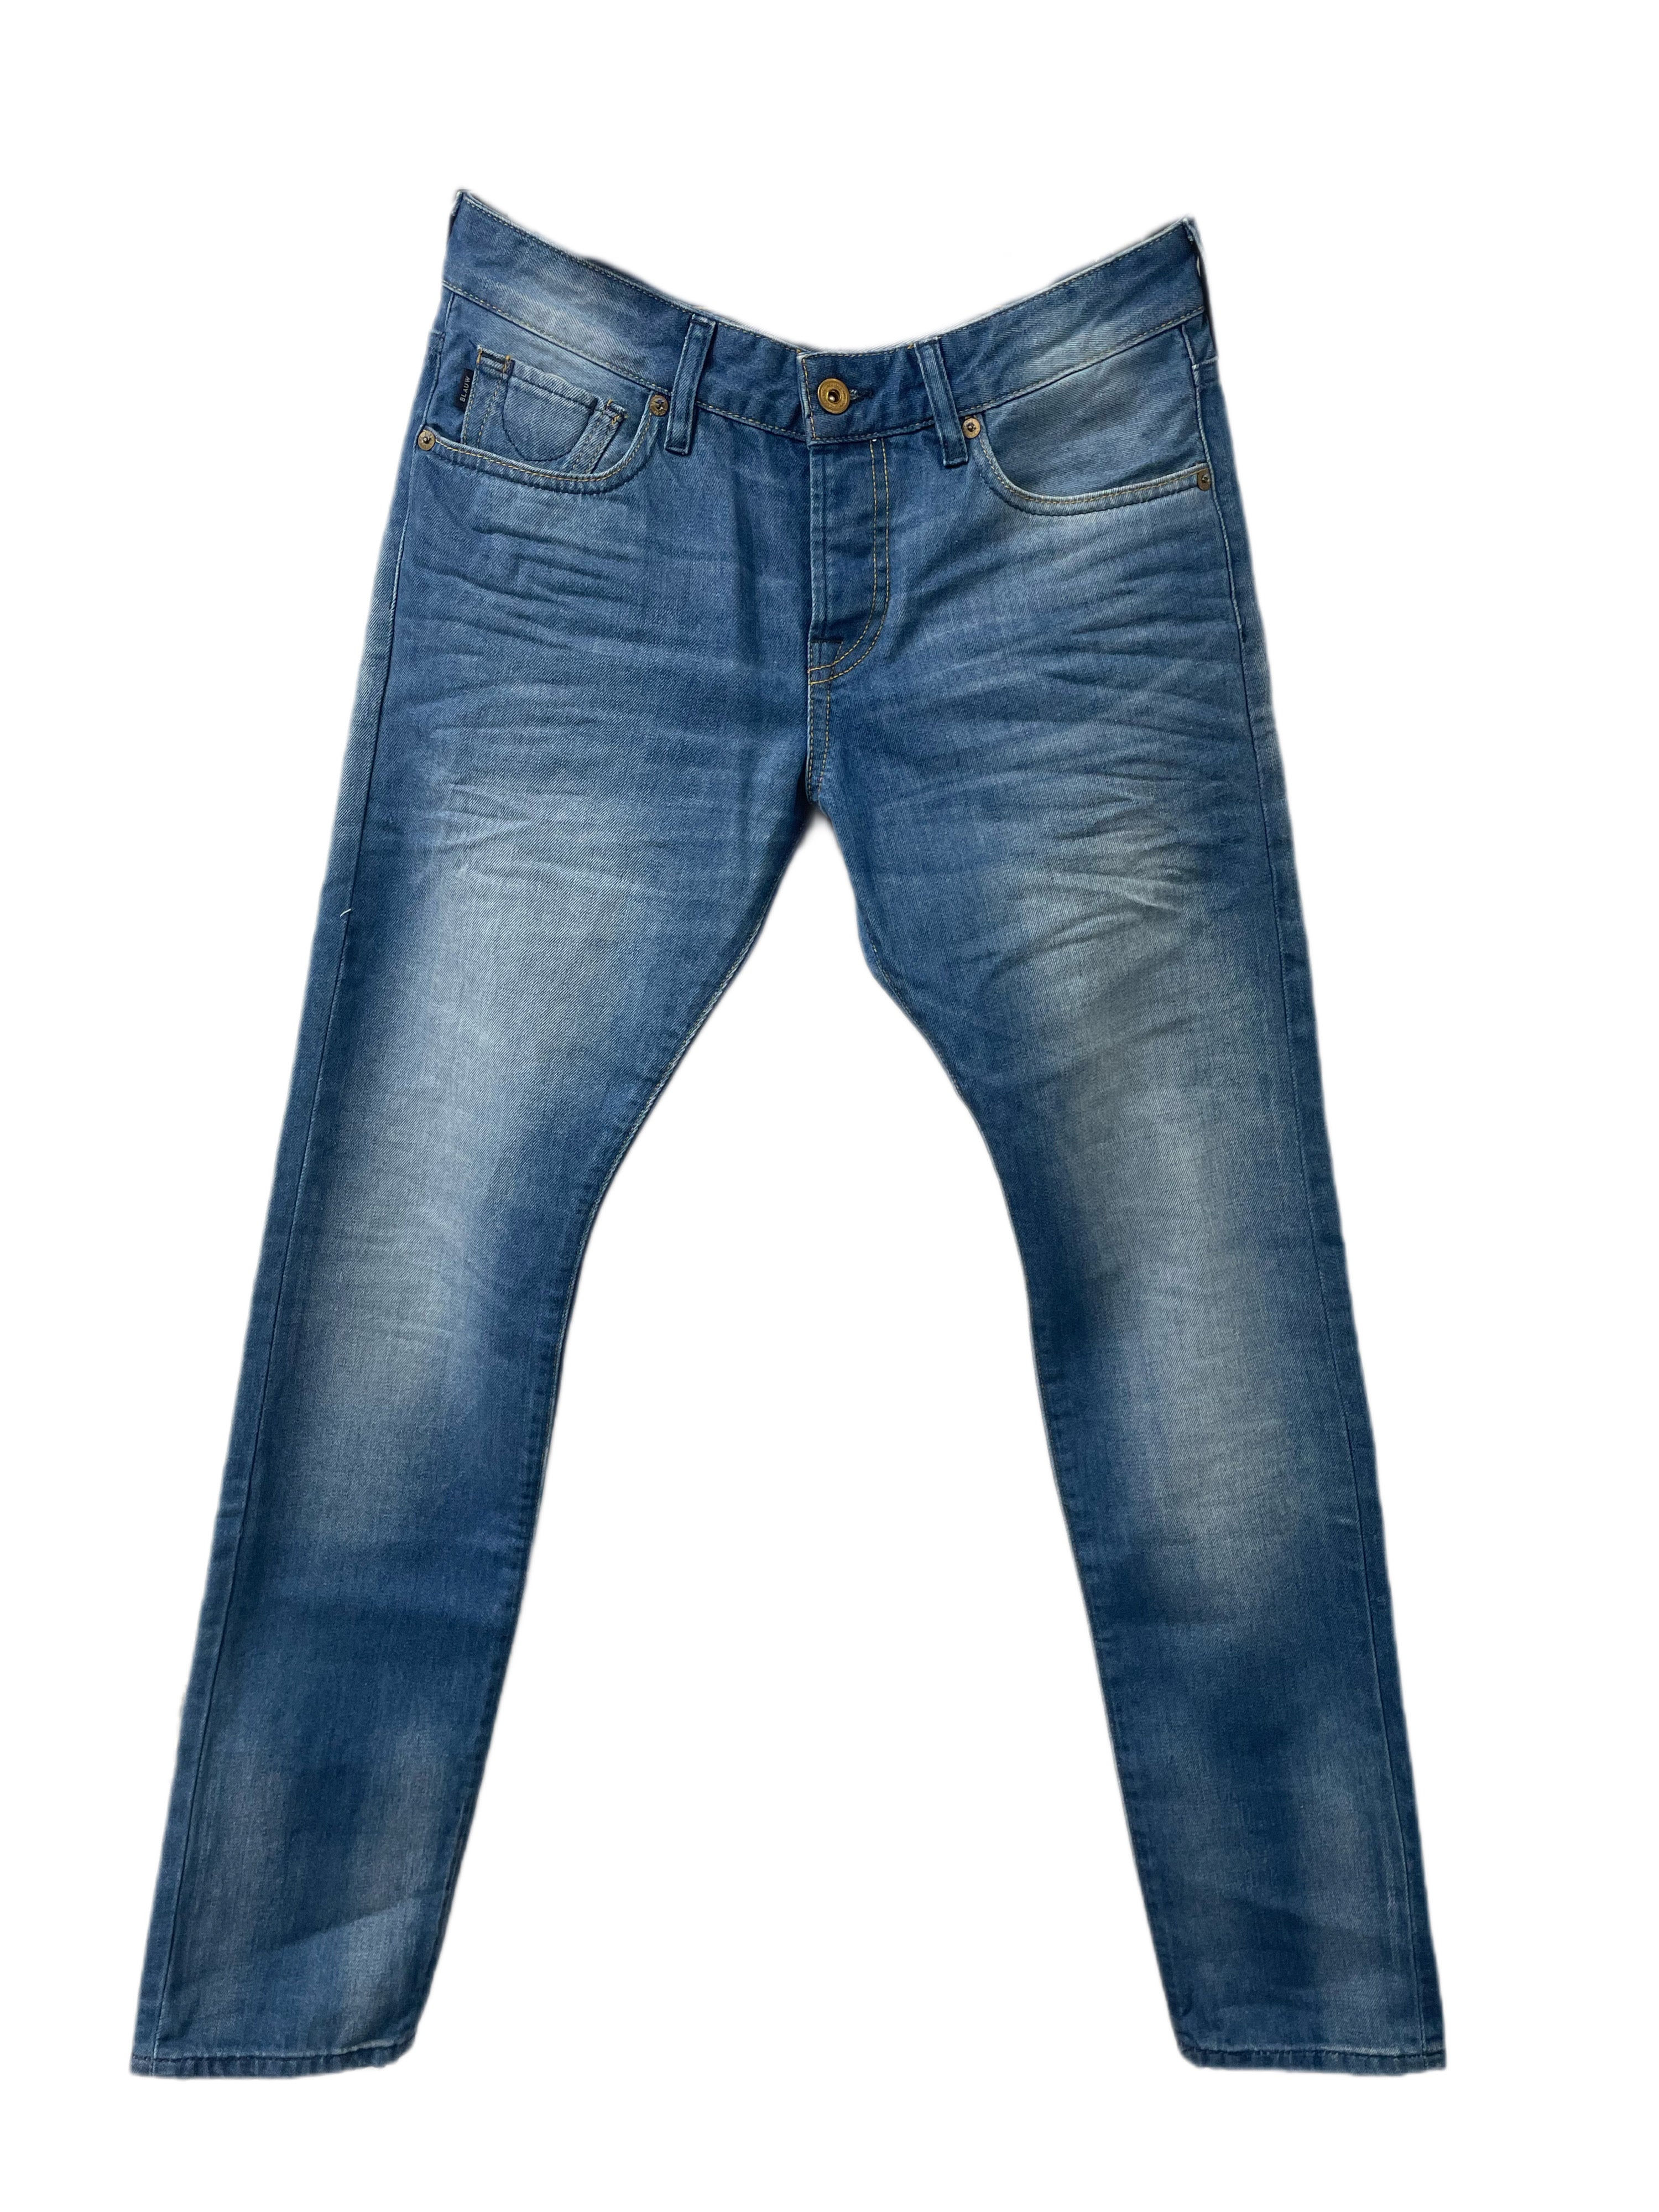 SCOTCH & SODA Men's Blue Amsterdam Blauw Jeans NWT – Walk Into Fashion